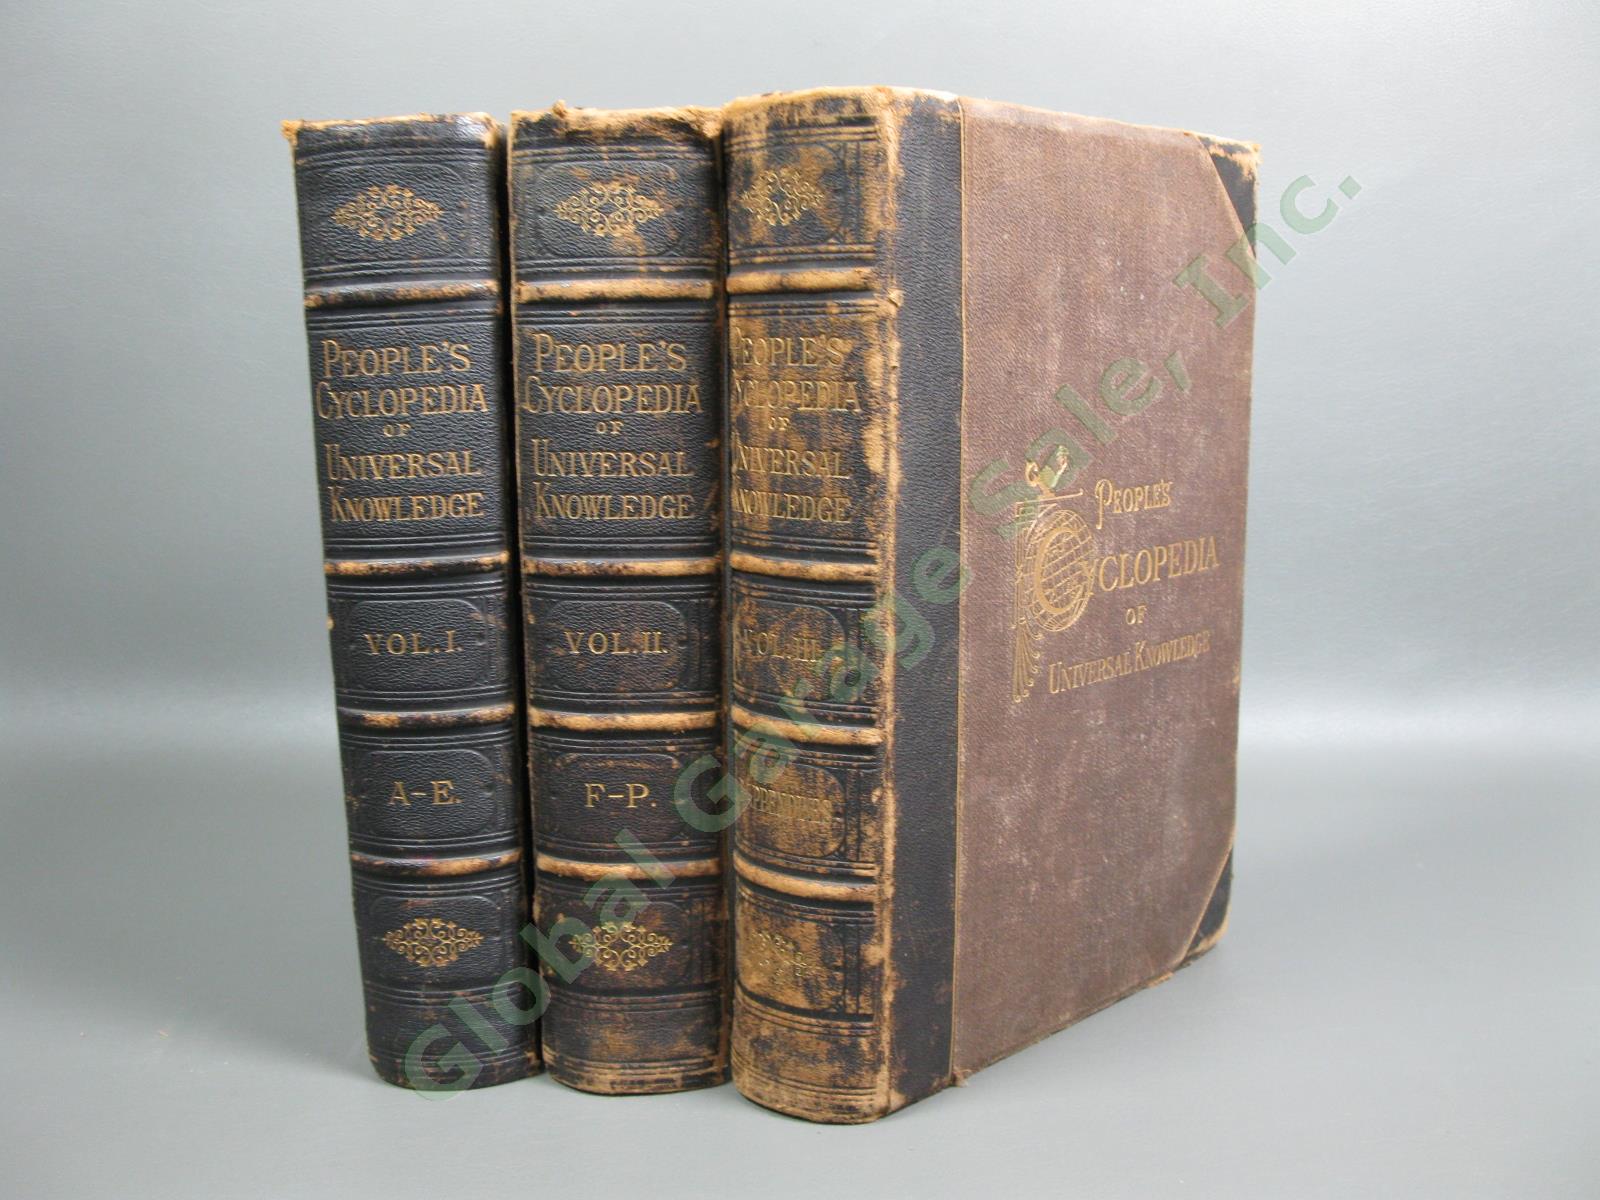 1883 Peoples Cyclopedia Universal Knowledge Vol 1-3 Illustrated Encyclopedia Set